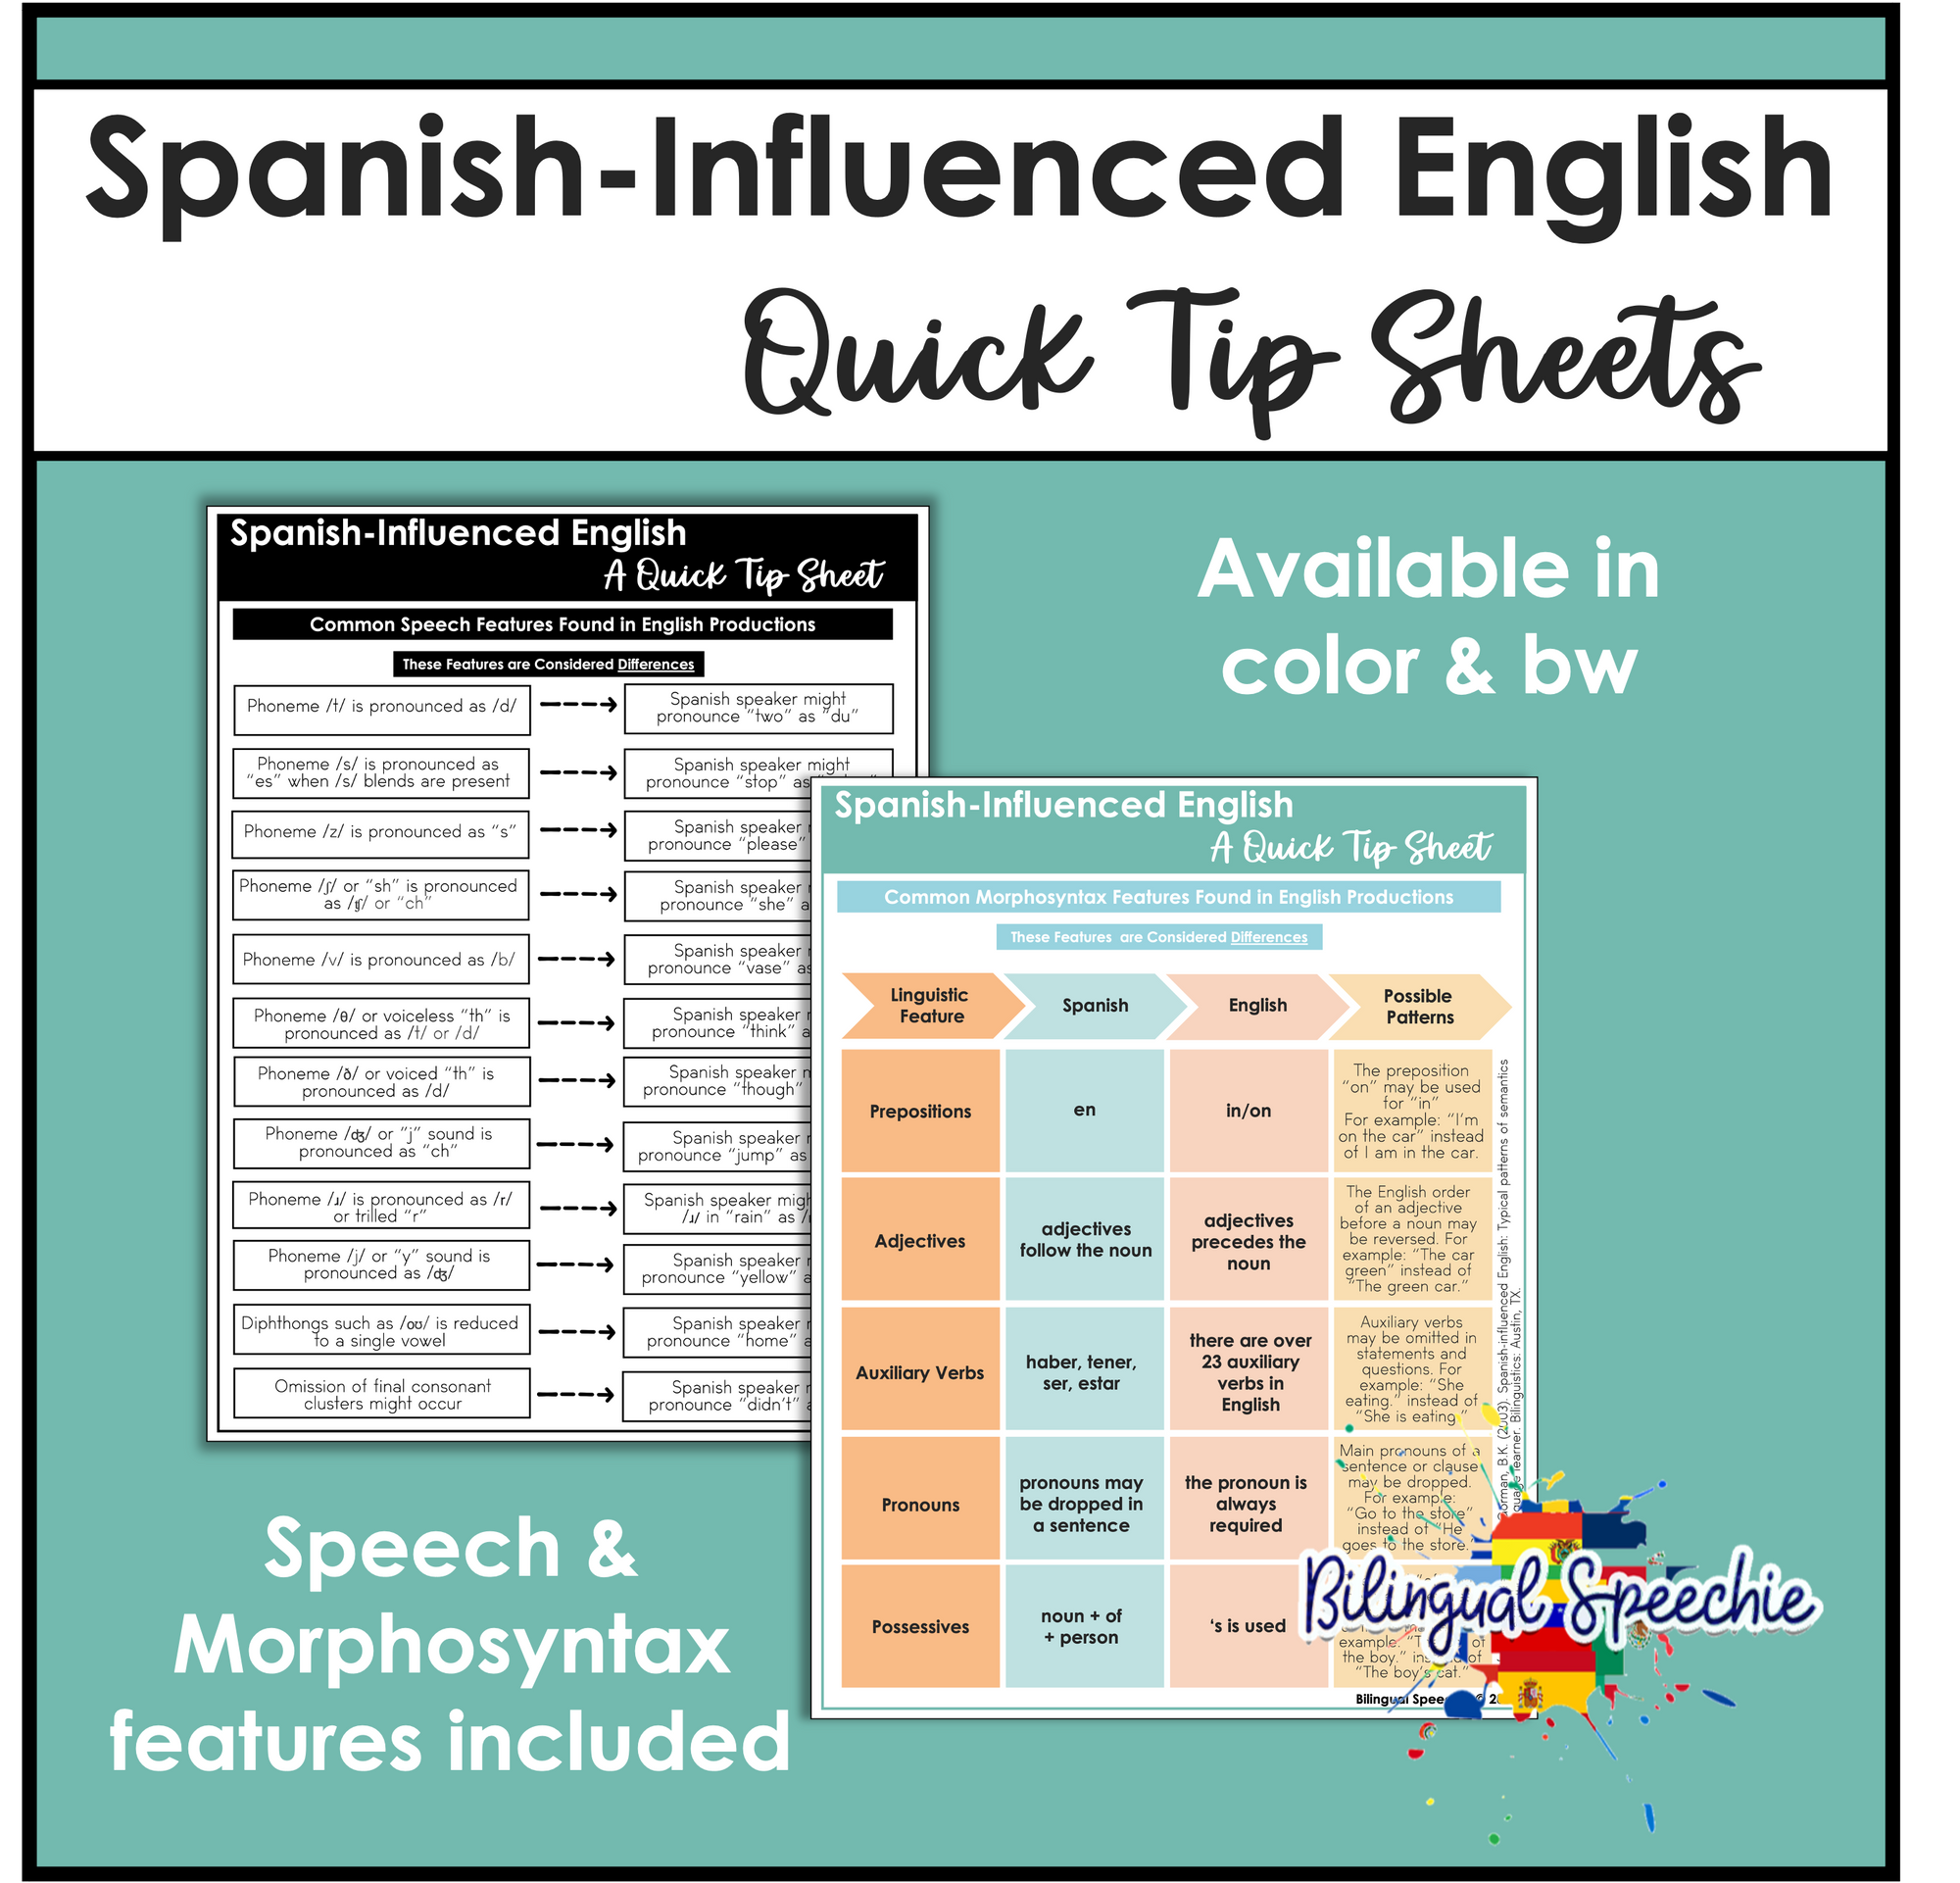 Spanish-Influenced English Quick Tip Sheet